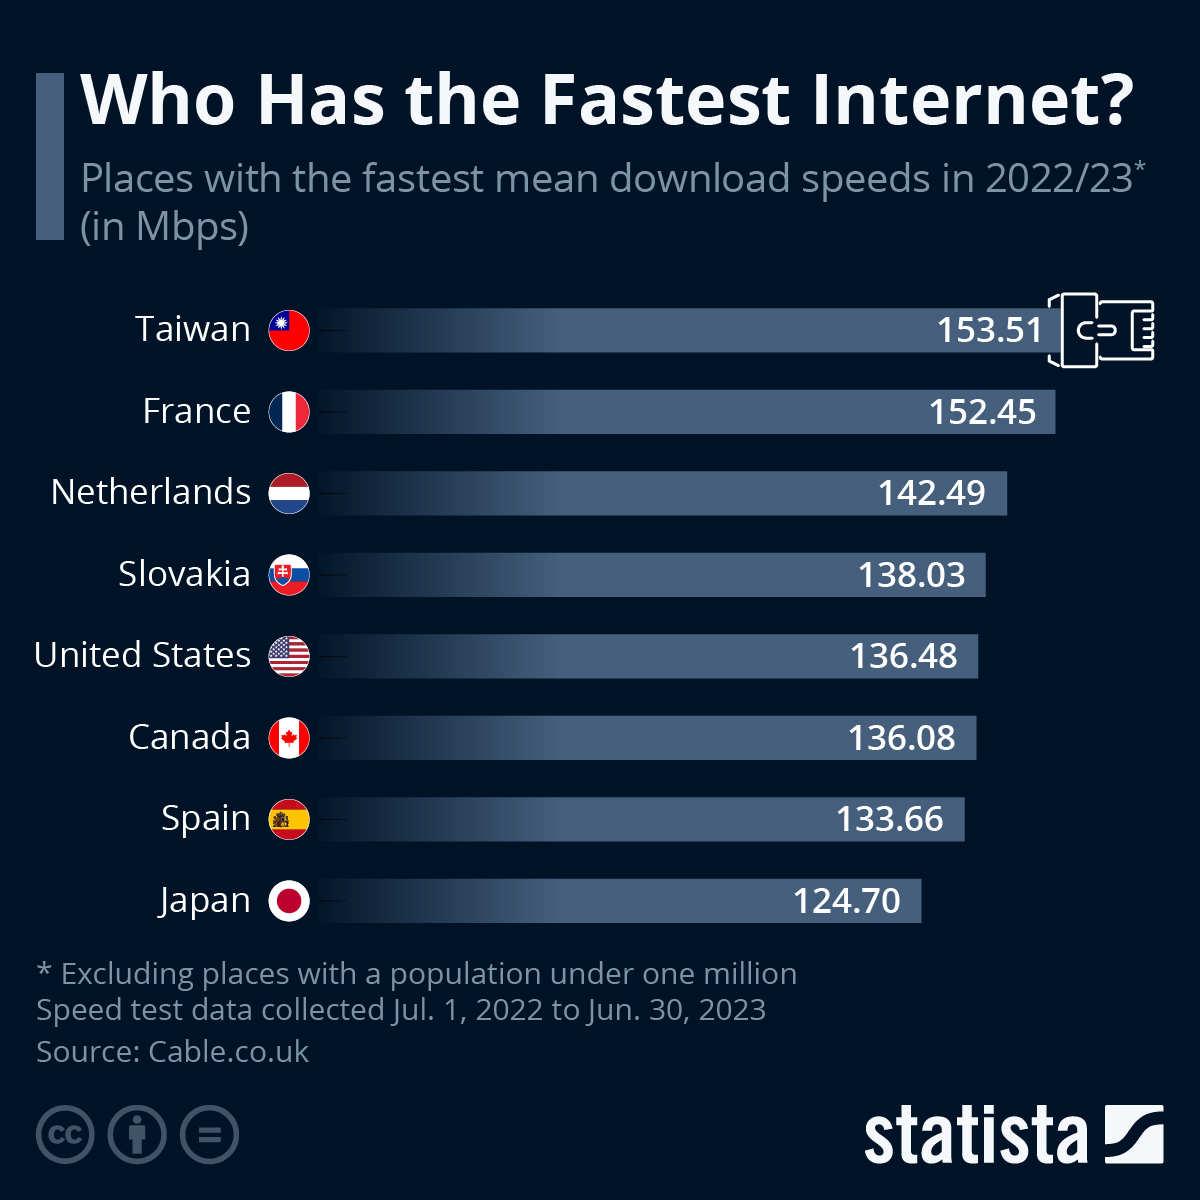 Who Has the Fastest Internet? #Internet #FastetInternet #Taiwan #France #Netherlands #Slovakia #US #Canada #Spain #Japan #Statista